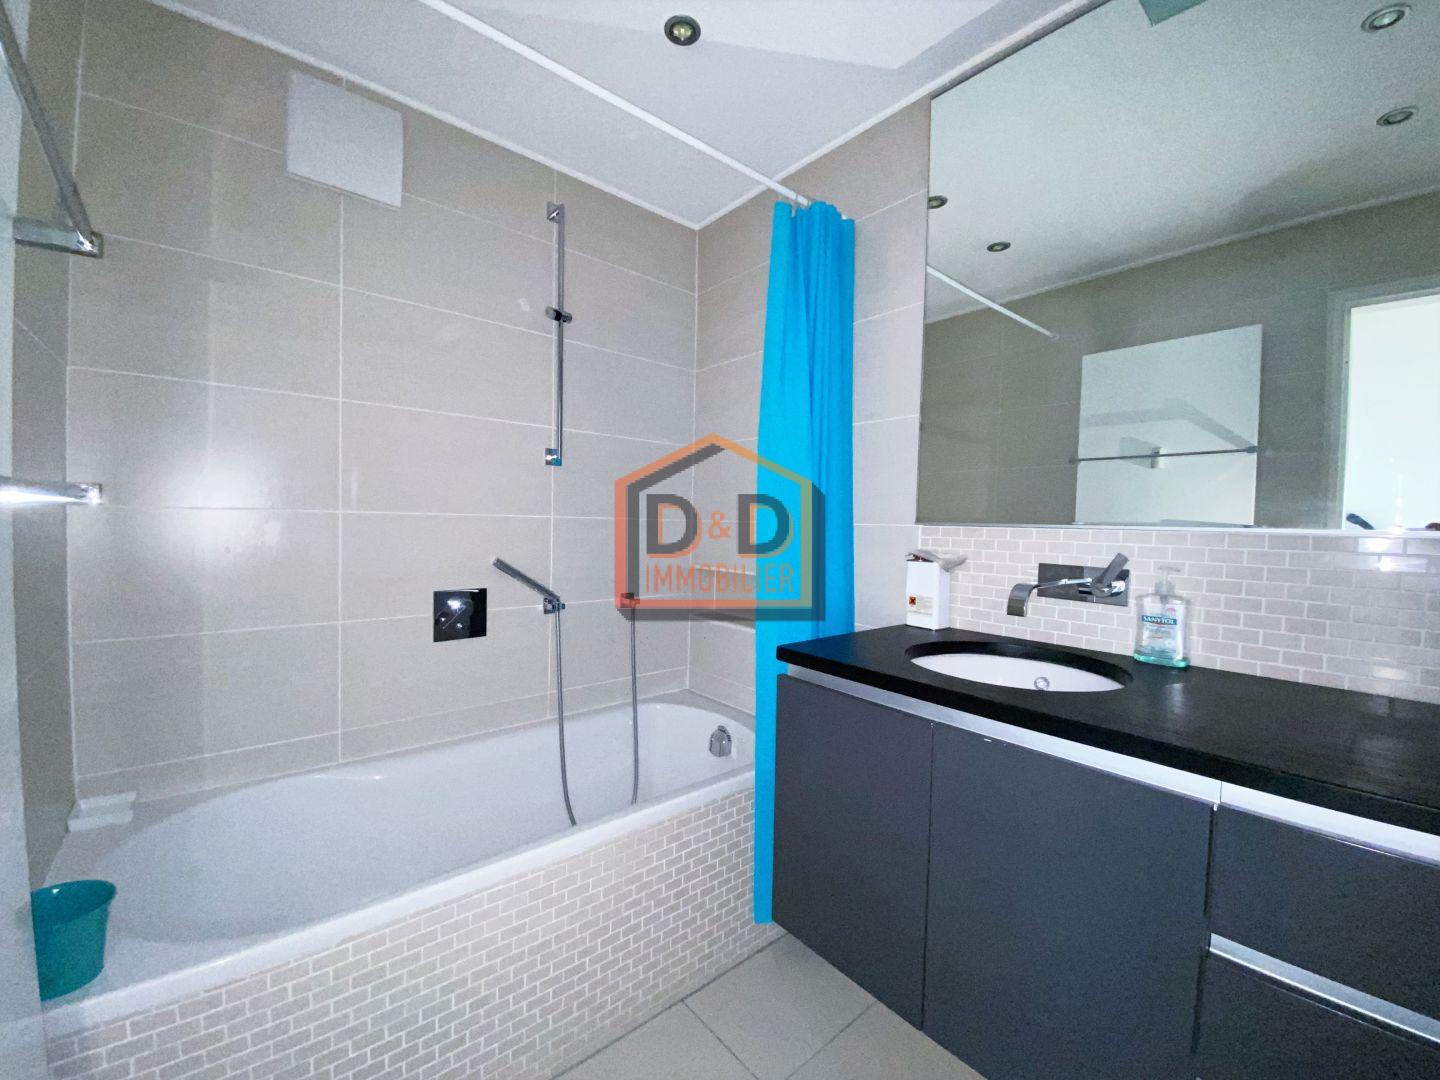 Appartement à Luxembourg-Merl, 60 m², 1 chambre, 1 salle de bain, 1 500 €/mois